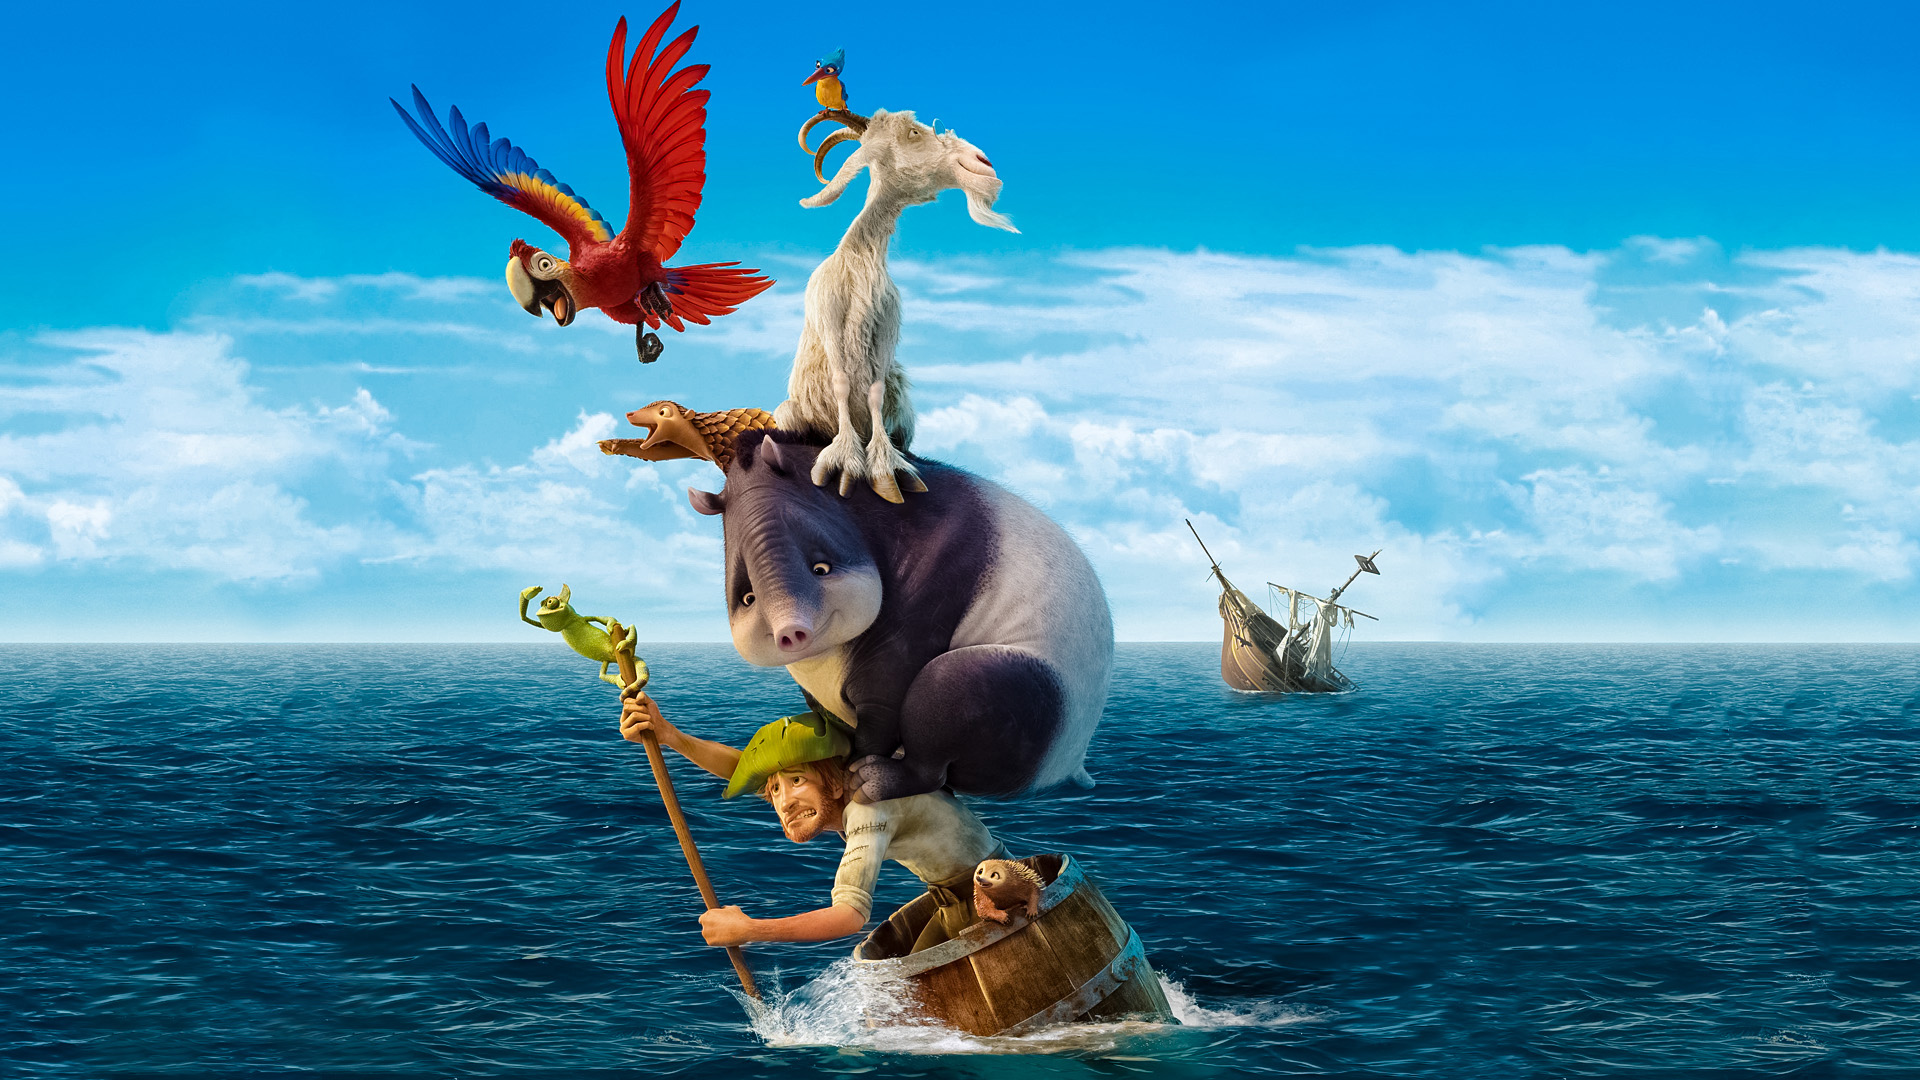 Movie Robinson Crusoe: The Wild Life HD Wallpaper